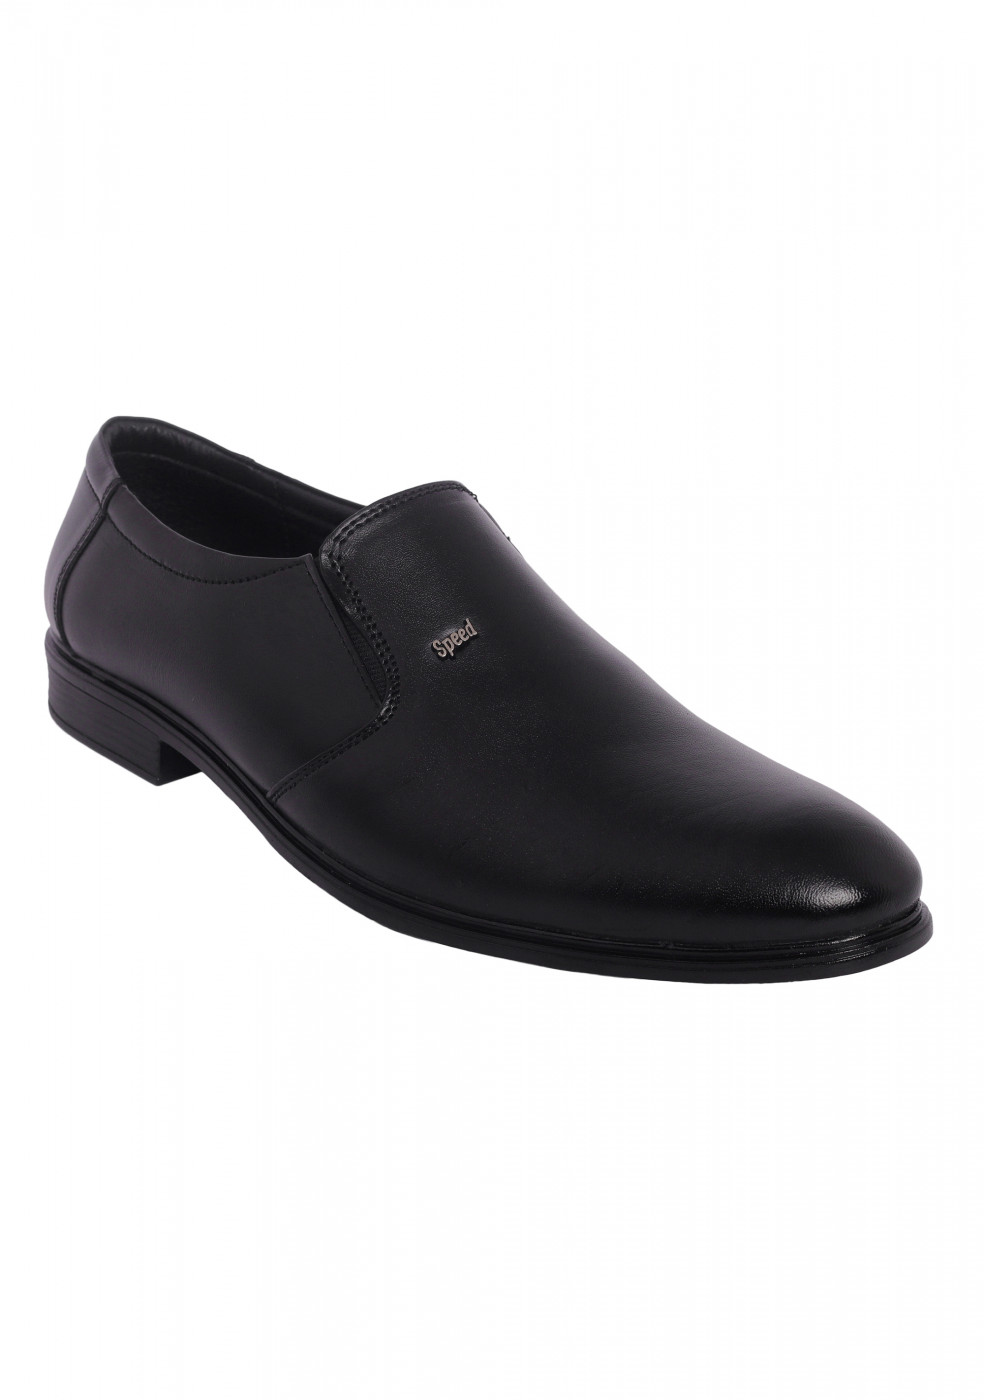 XSTOM Leather Formal Black Shoes For Men